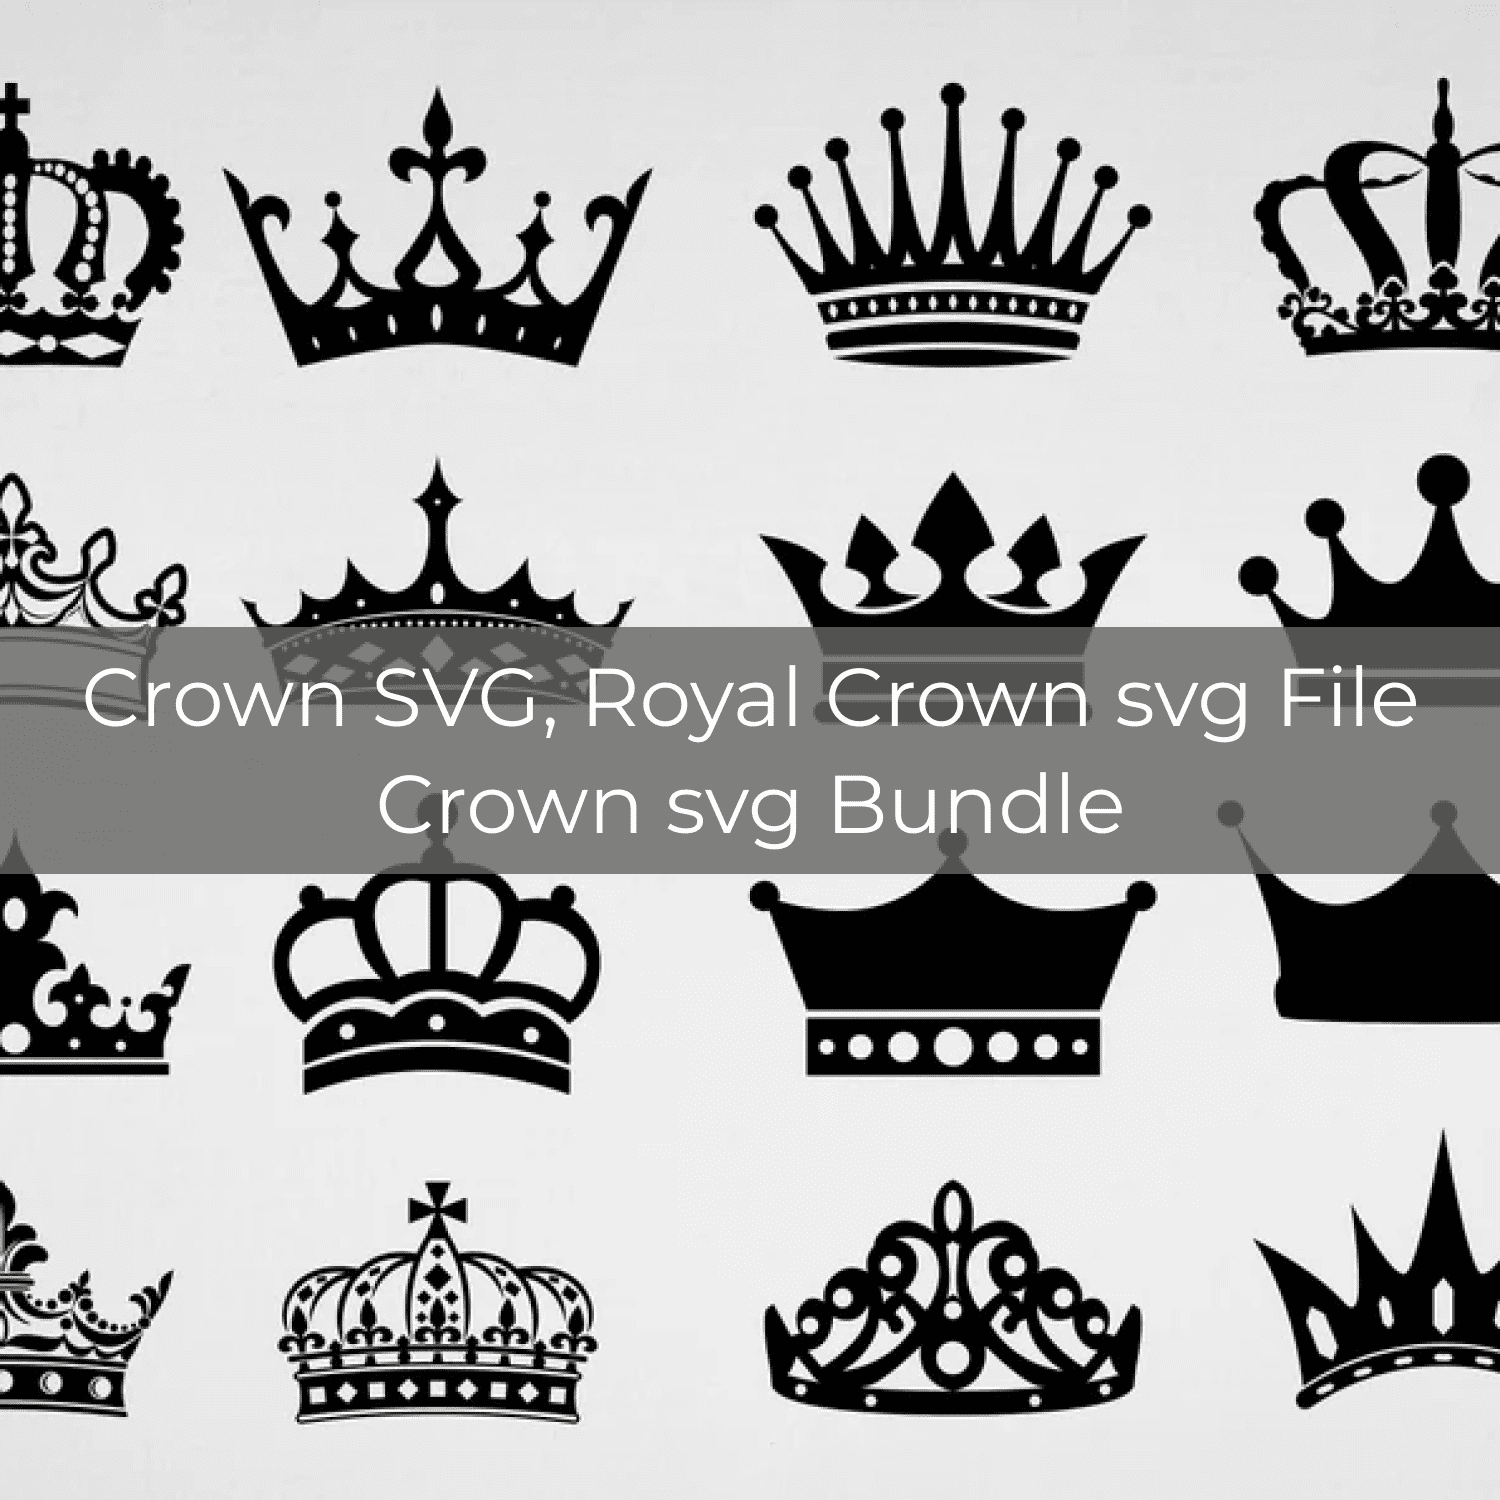 Royal Crown SVG Bundle image.